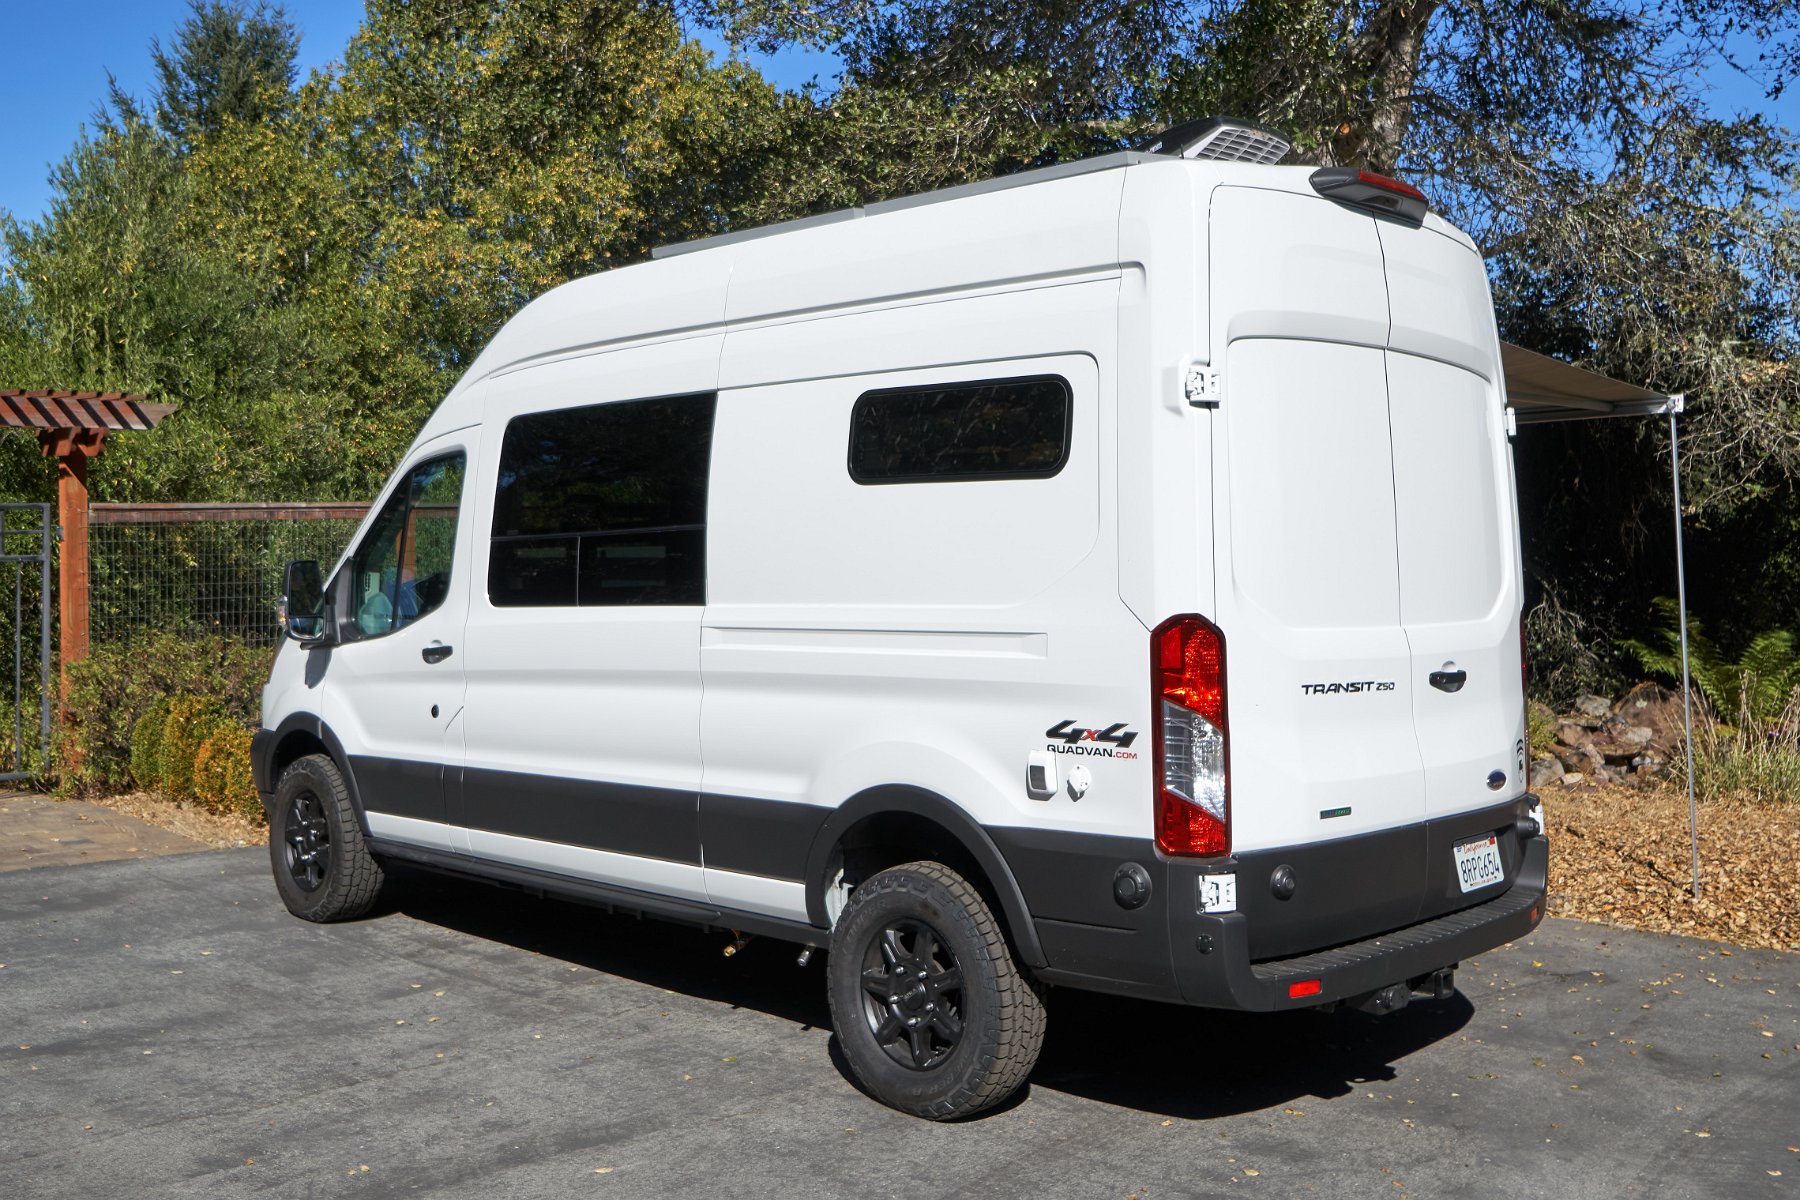 Tips for Running a Diesel Heater in a Van Conversion - Freedom Vans